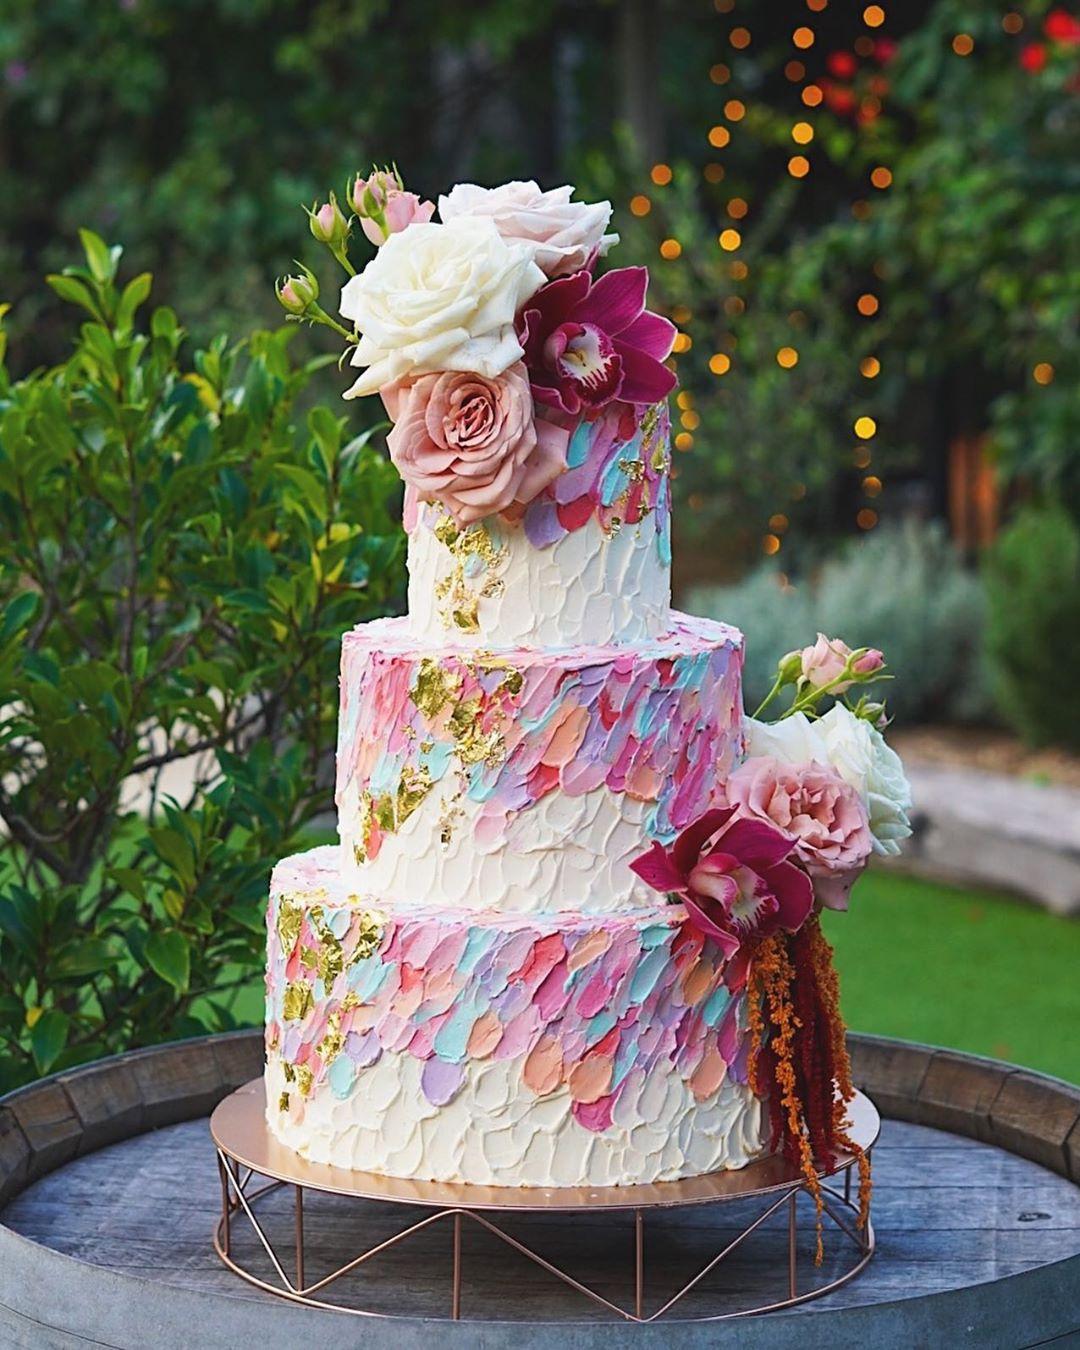 Bride to Be Cake Topper Wedding / Bridal Shower / Bachelorette Party Cake  Topper | eBay